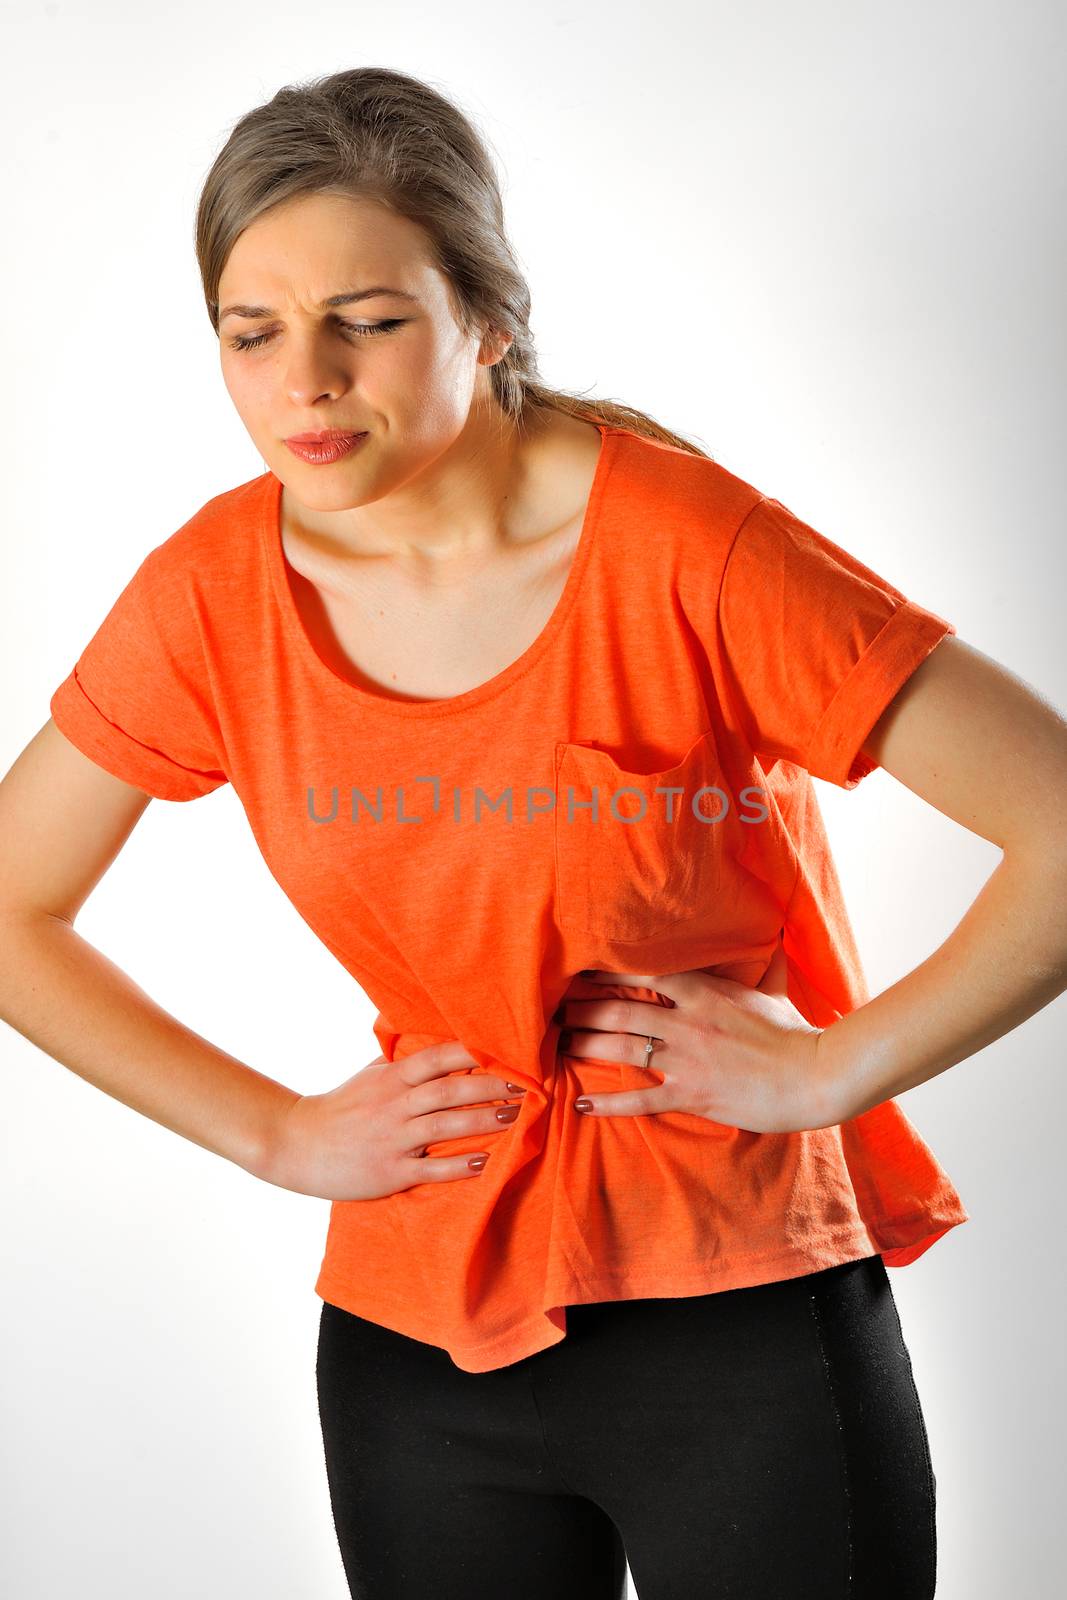 Caucasian woman having abdominal pain